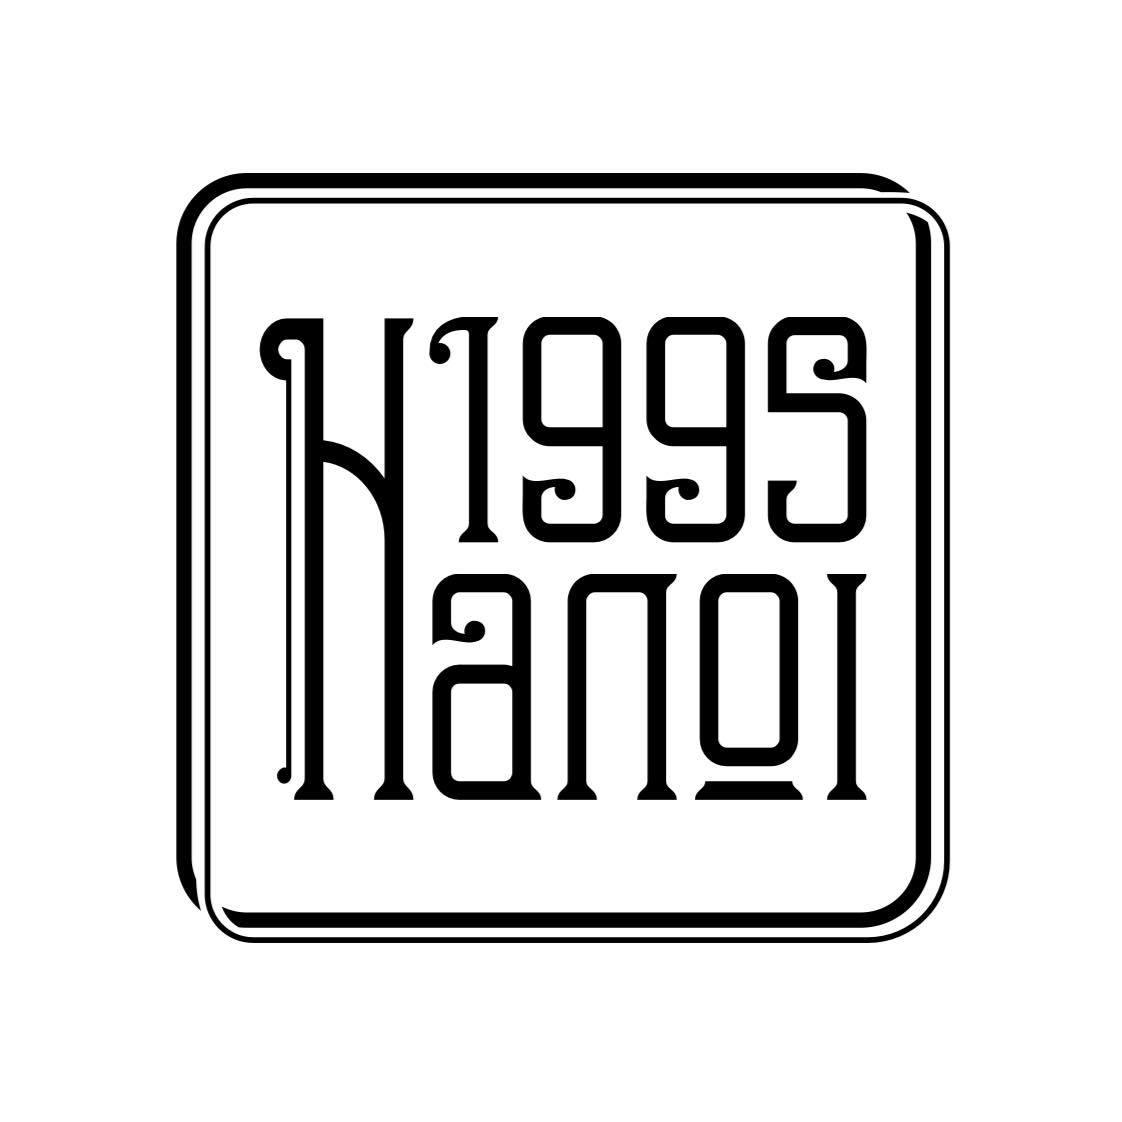 Restaurant "1995 HANOI" in Bad Endorf